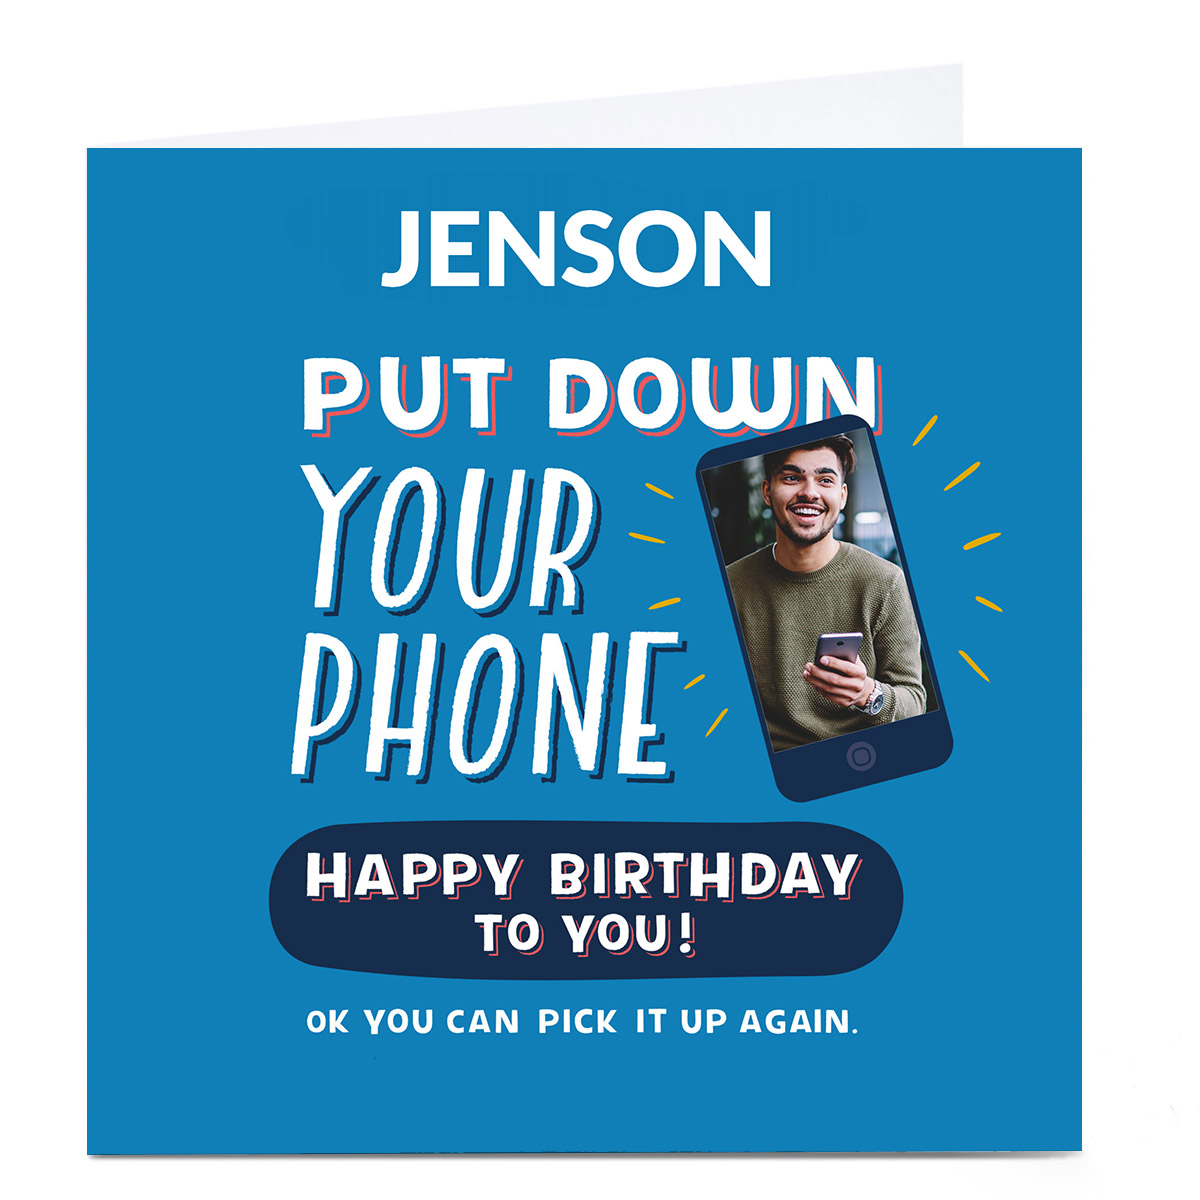 Photo Larger than Life Birthday Card - Phone Down